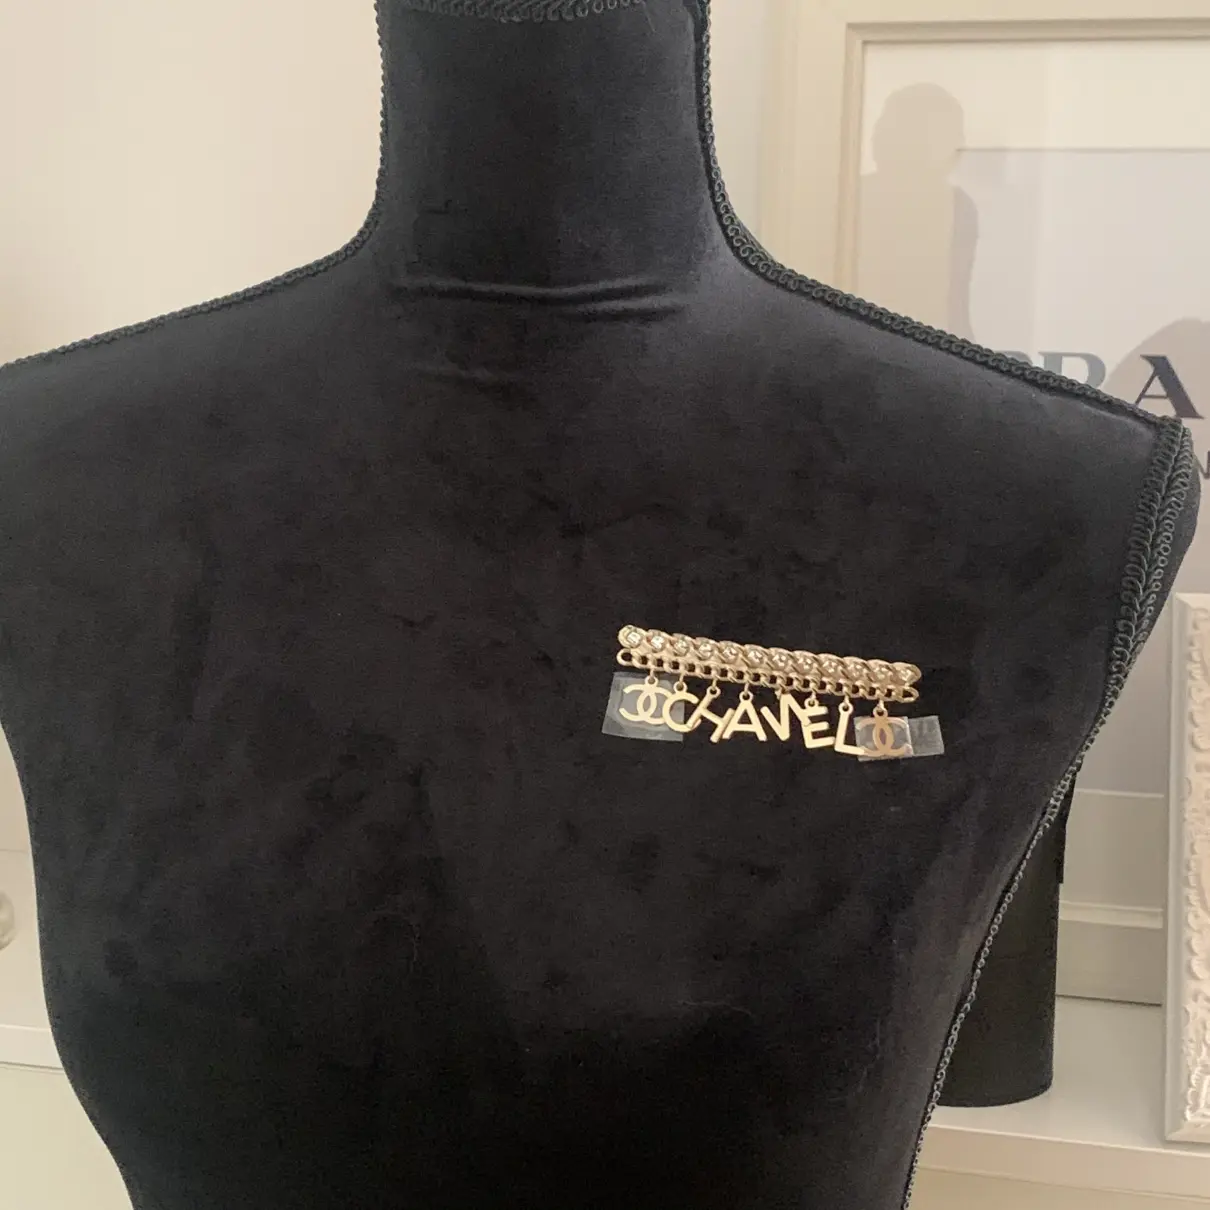 Buy Chanel CHANEL pin & brooche online